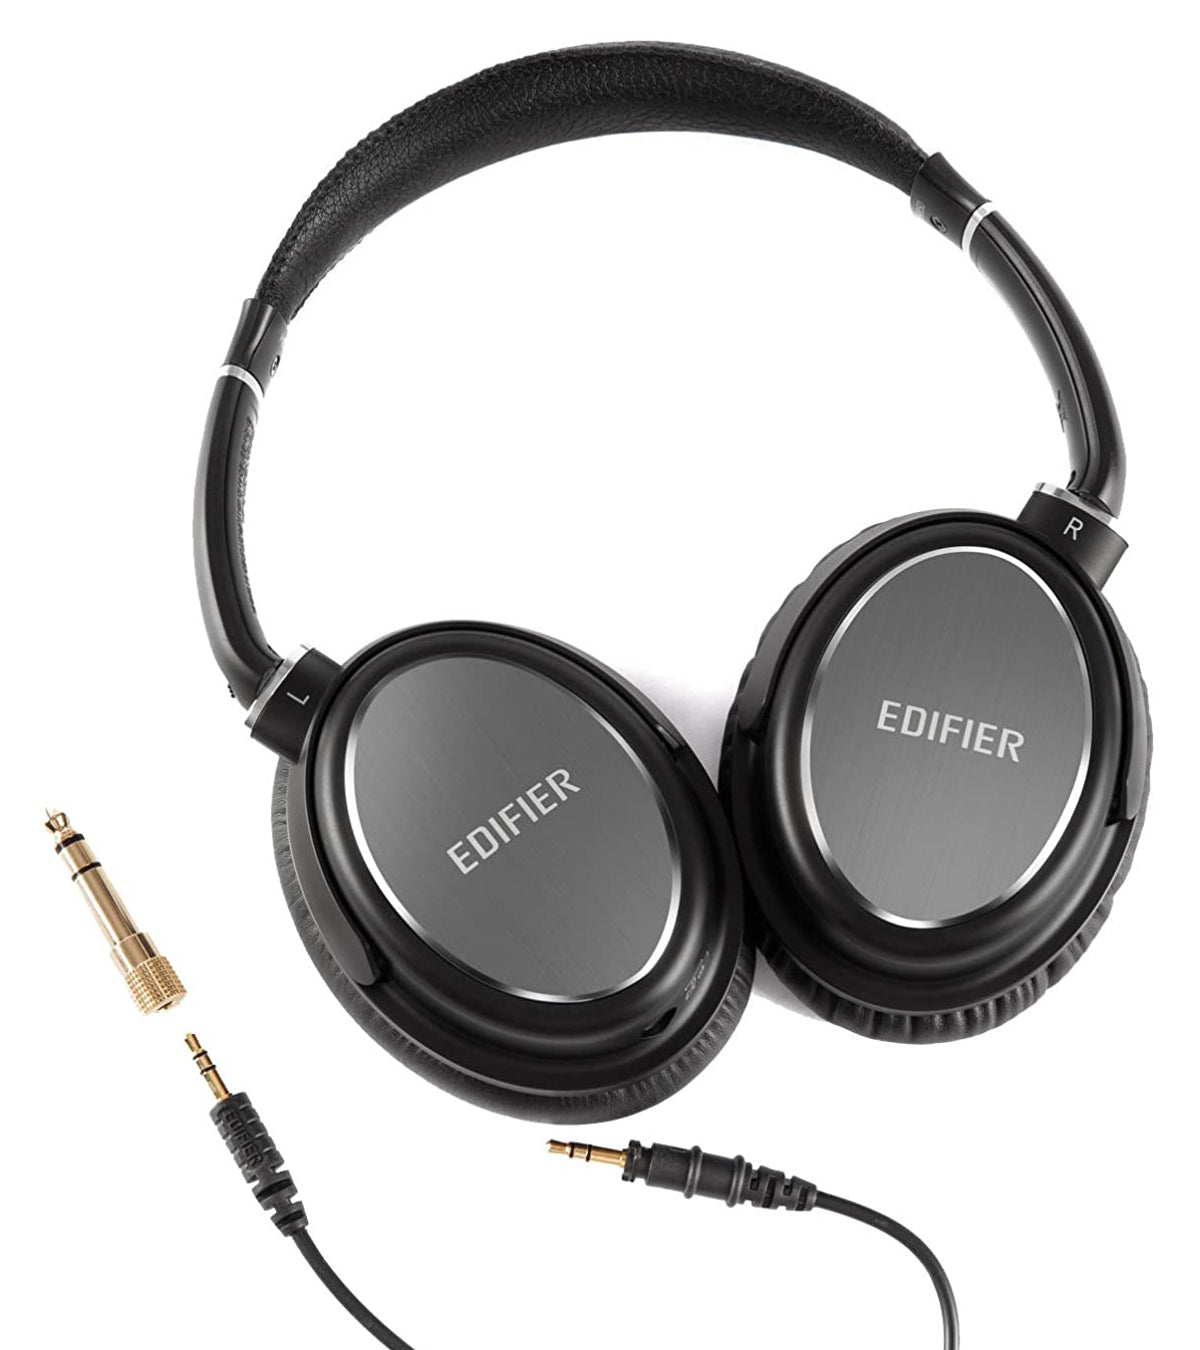 Edifier H850 Pro Series Audio Headphones - Black